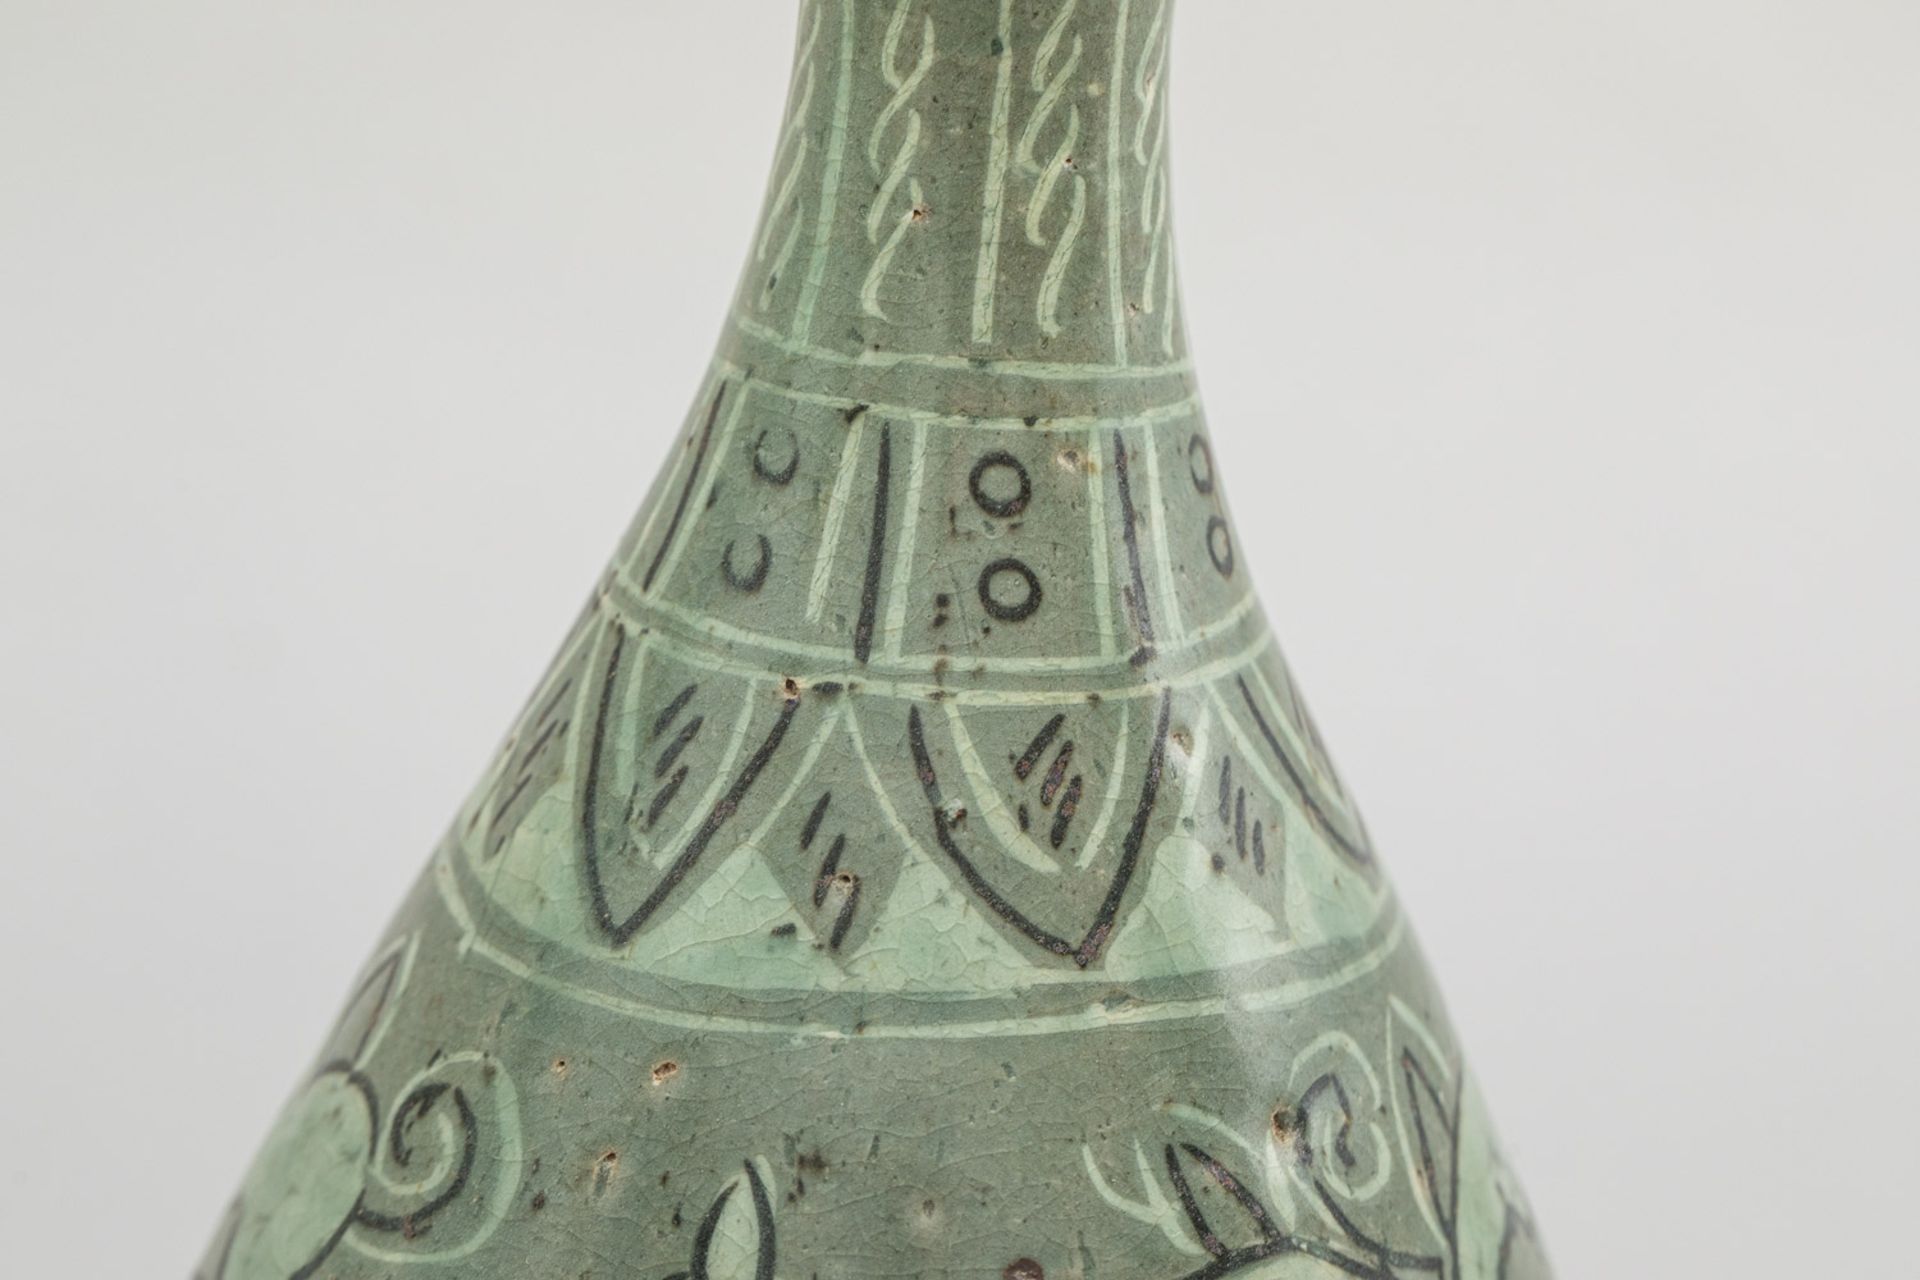 Early chinese vase - Image 2 of 3